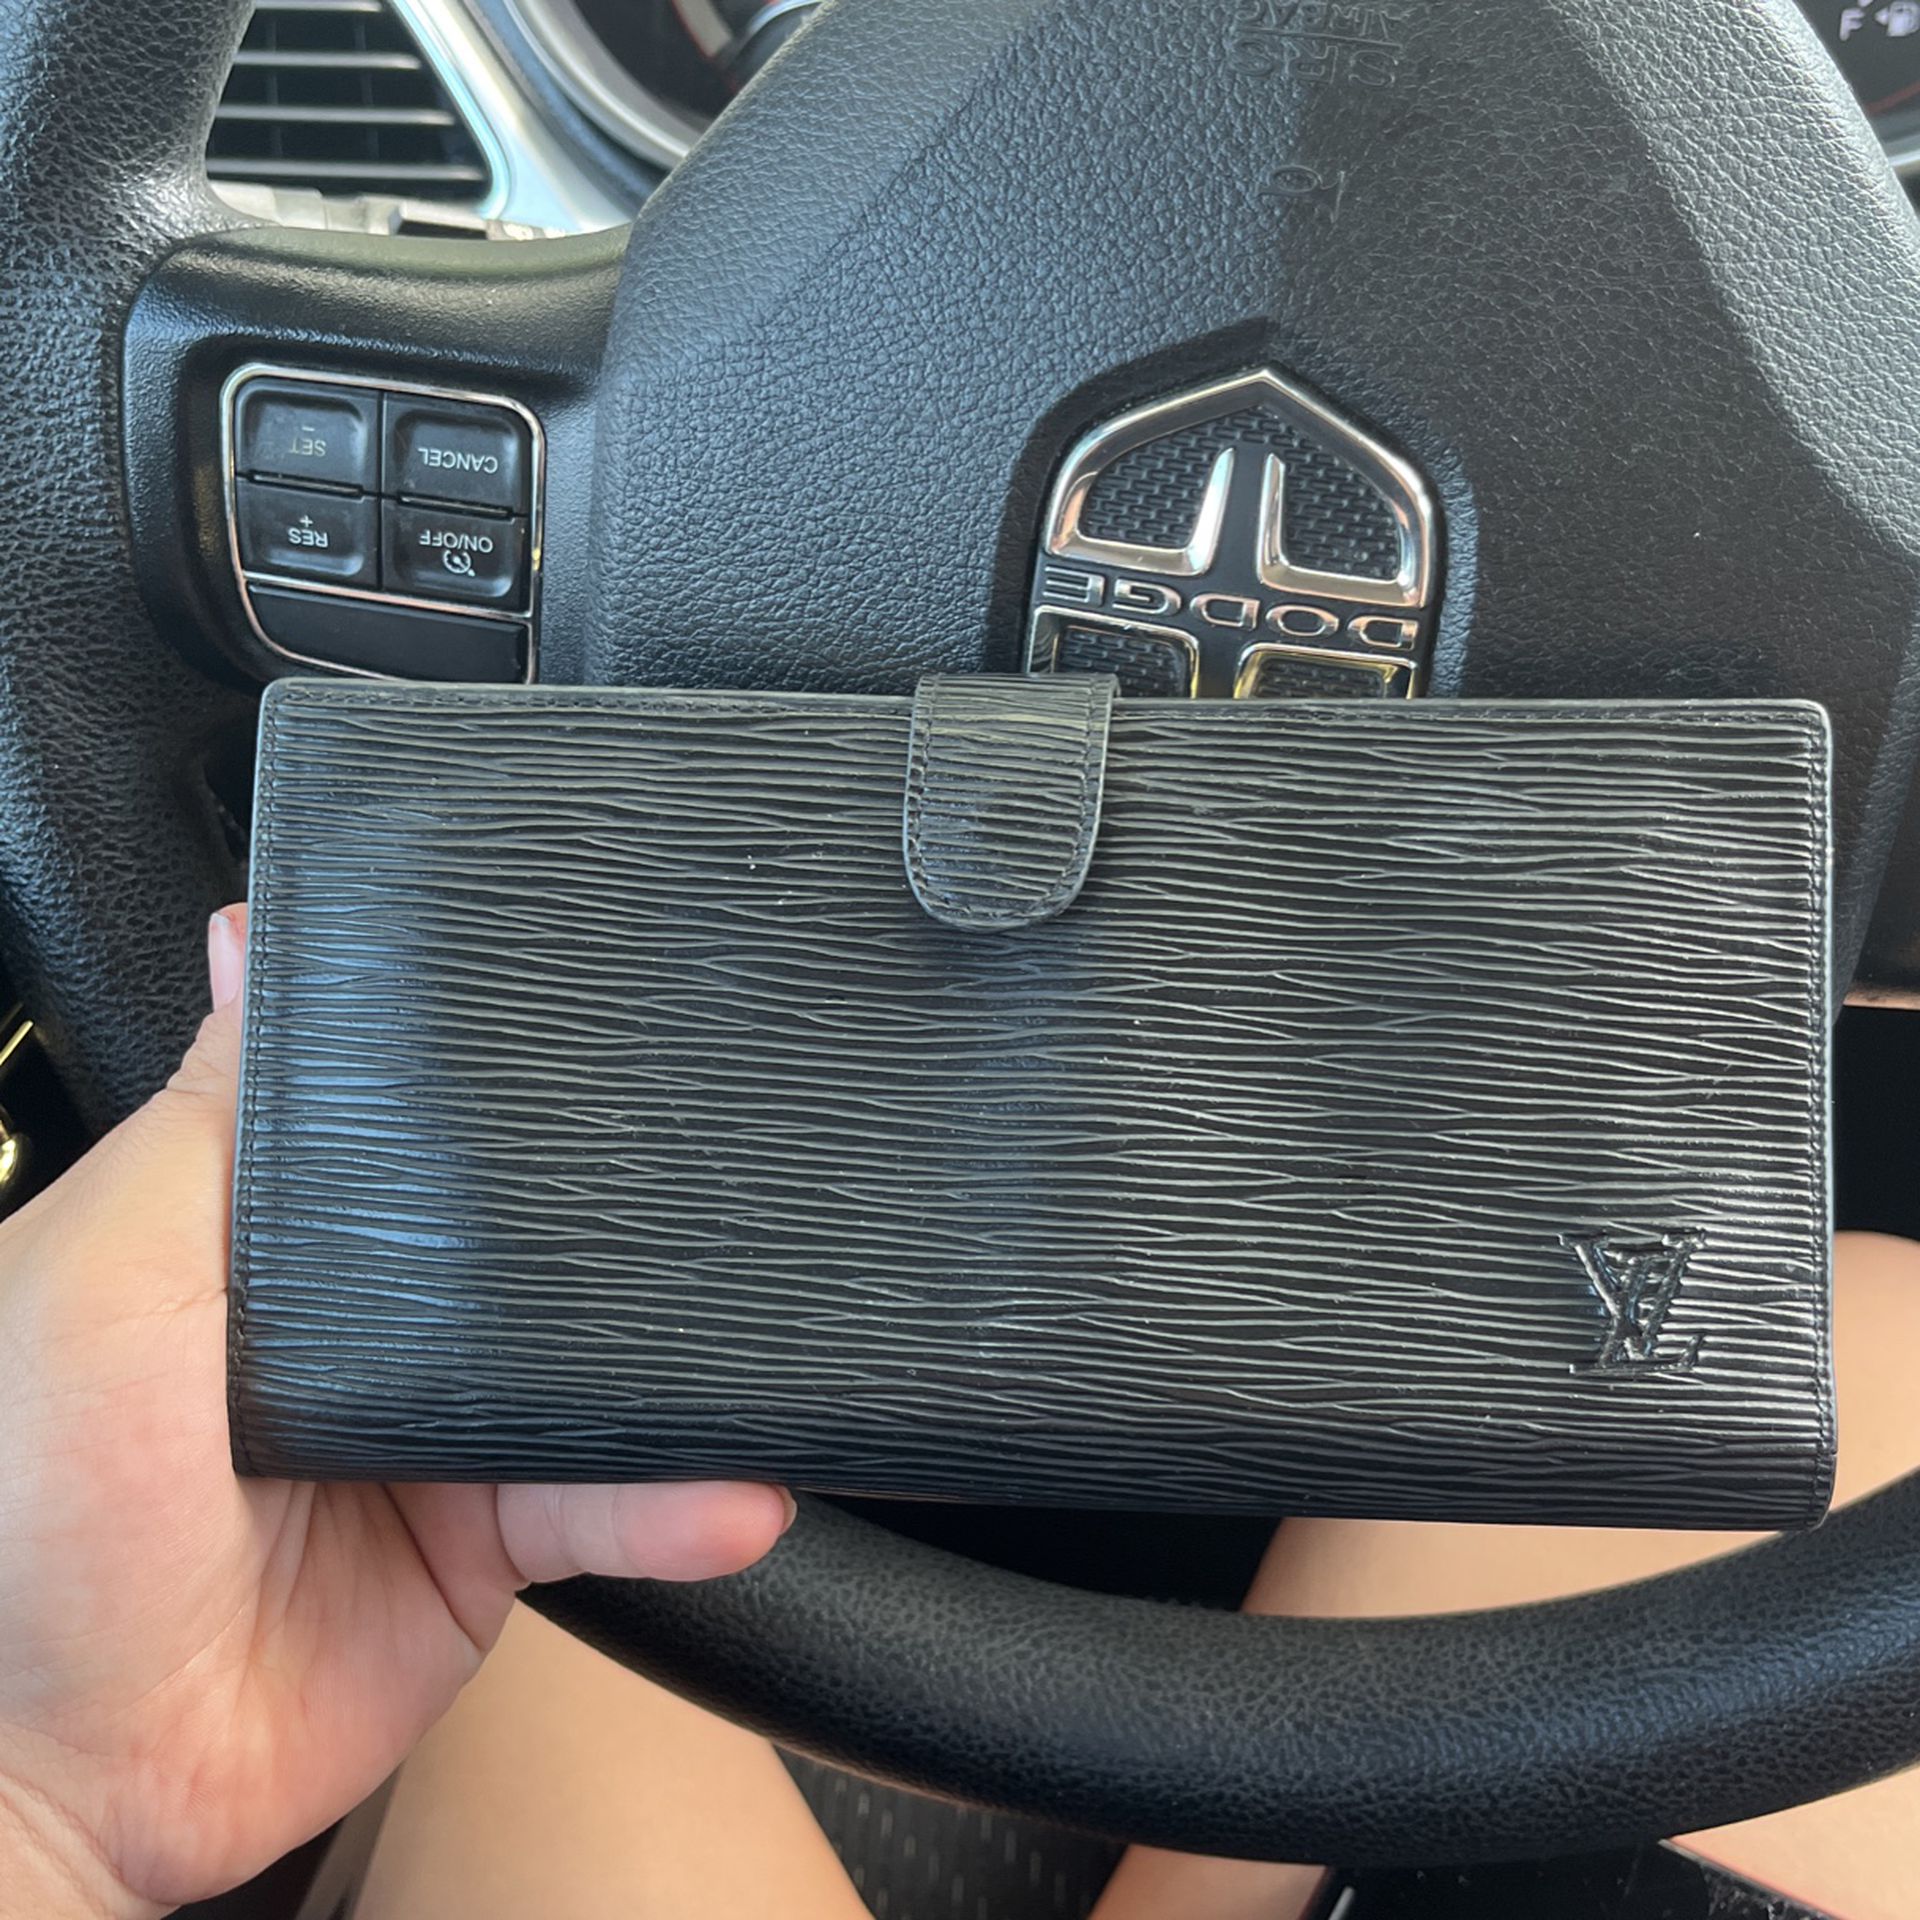 LV Wrist Wallet Bag for Sale in Houston, TX - OfferUp